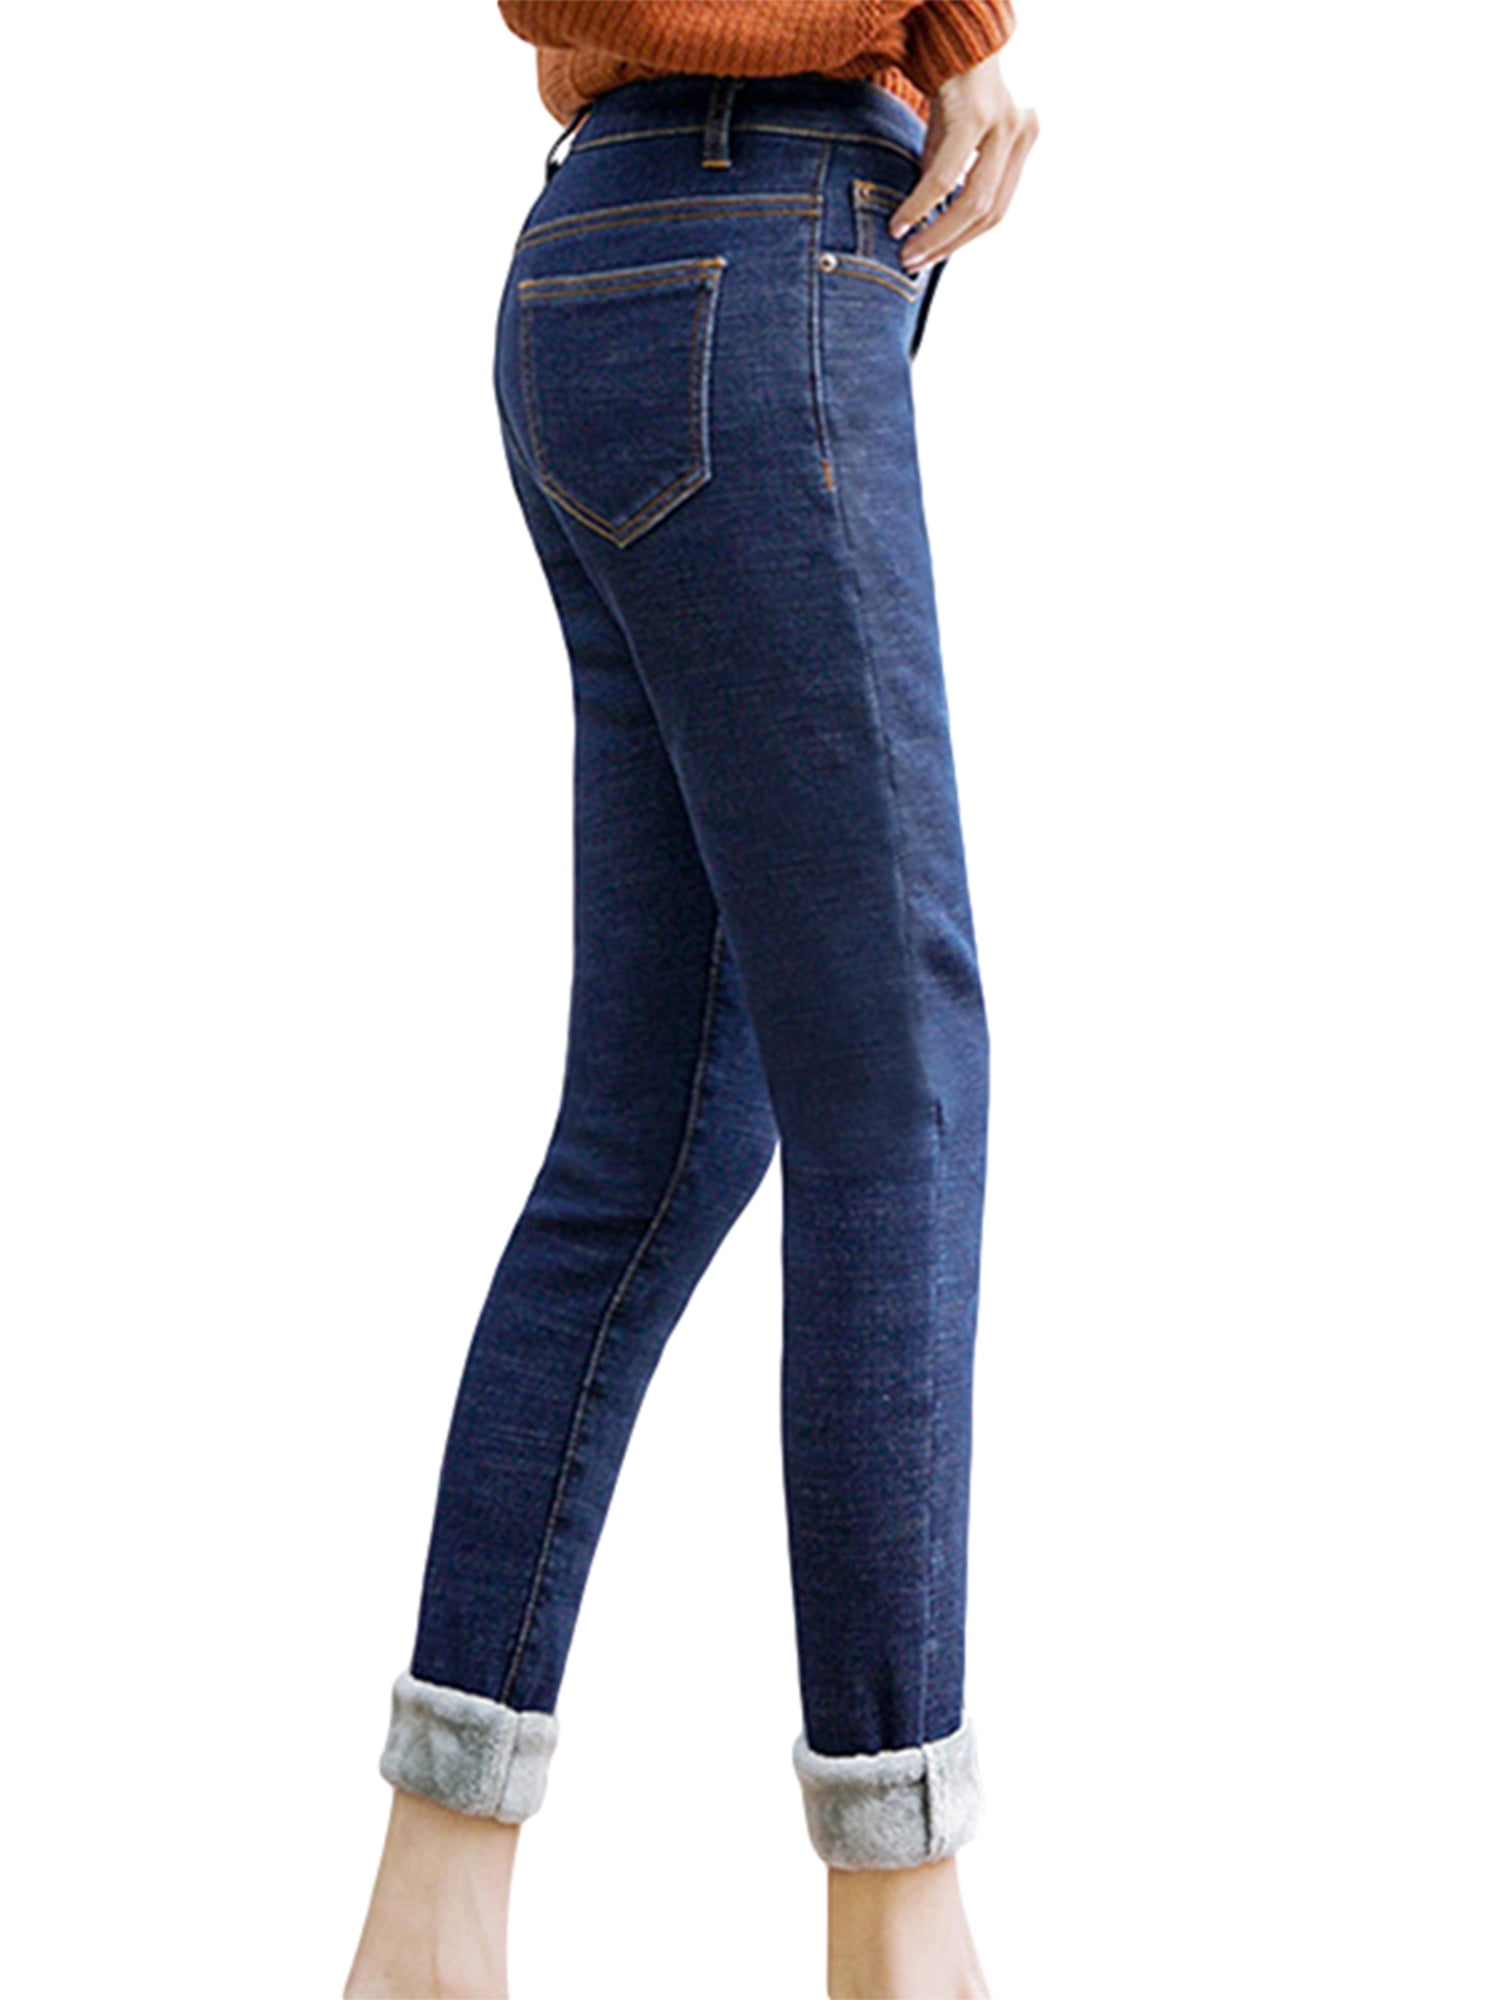 Women's Winter Jeans Thick Skinny Pants Fleece Lined Slim Stretch Warm Jeggings  Leggings 